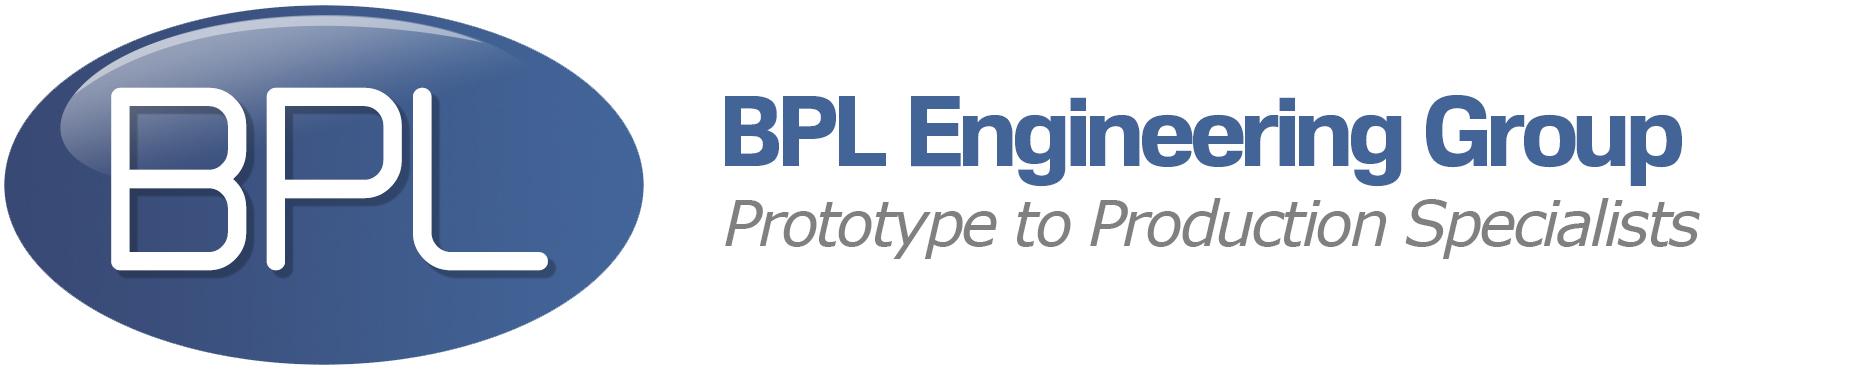 BPL ENGINEERING GROUP Logo